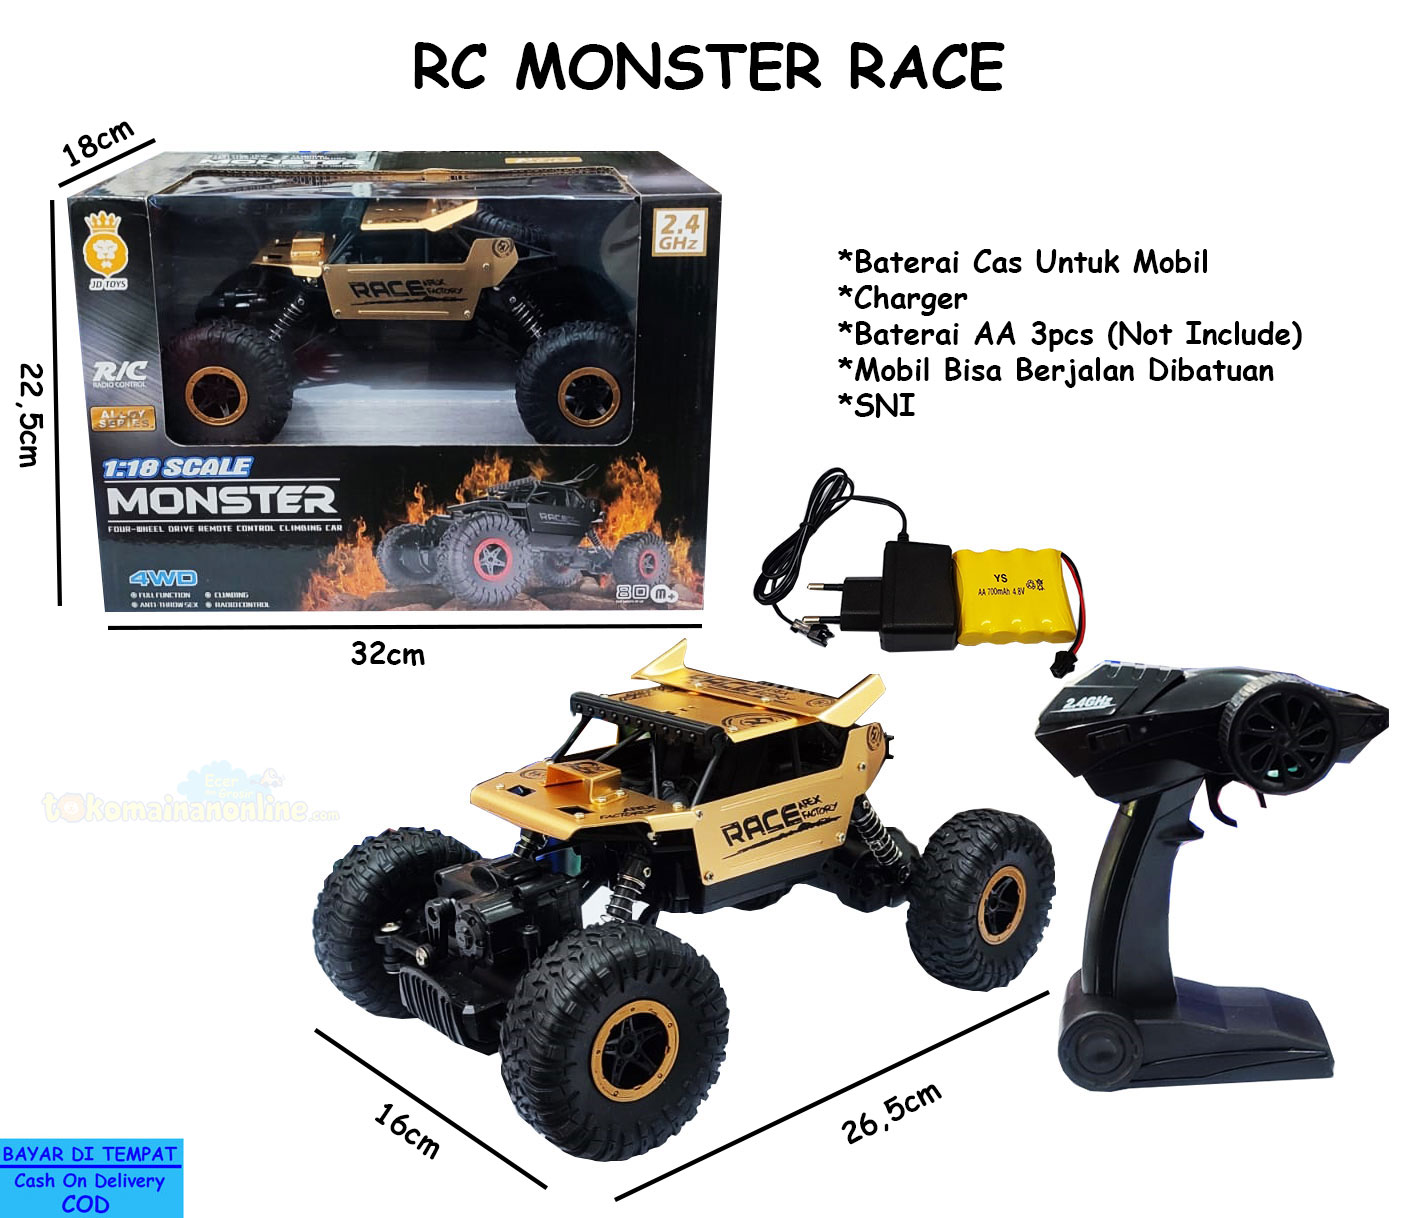 toko mainan online RC MONSTER RACE 1:18 - 699-108 ALLOY